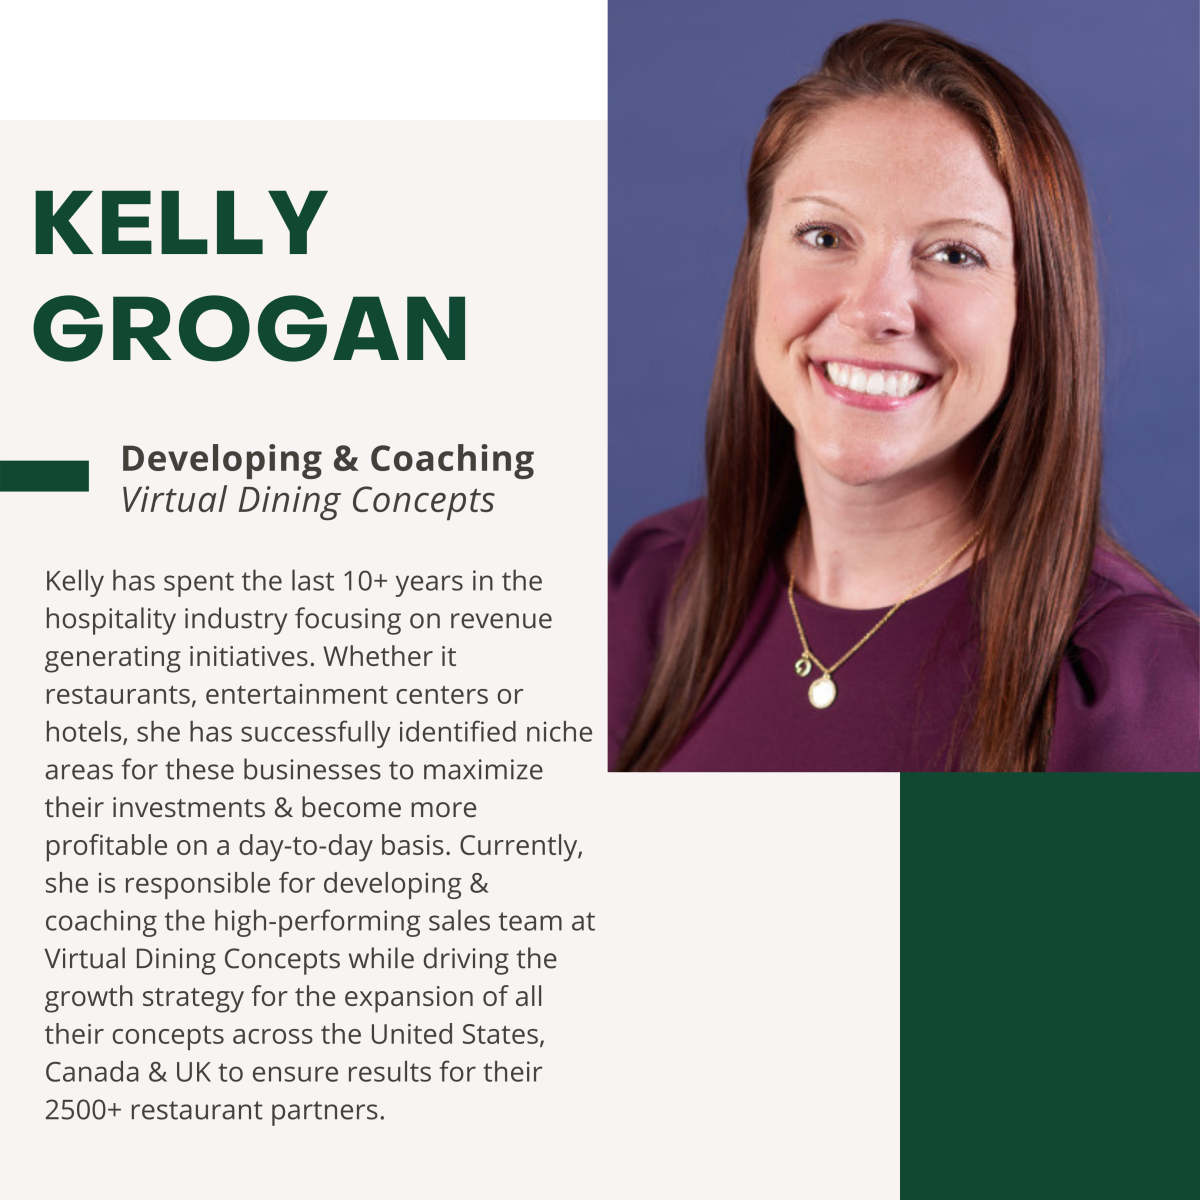 Kelly Grogan